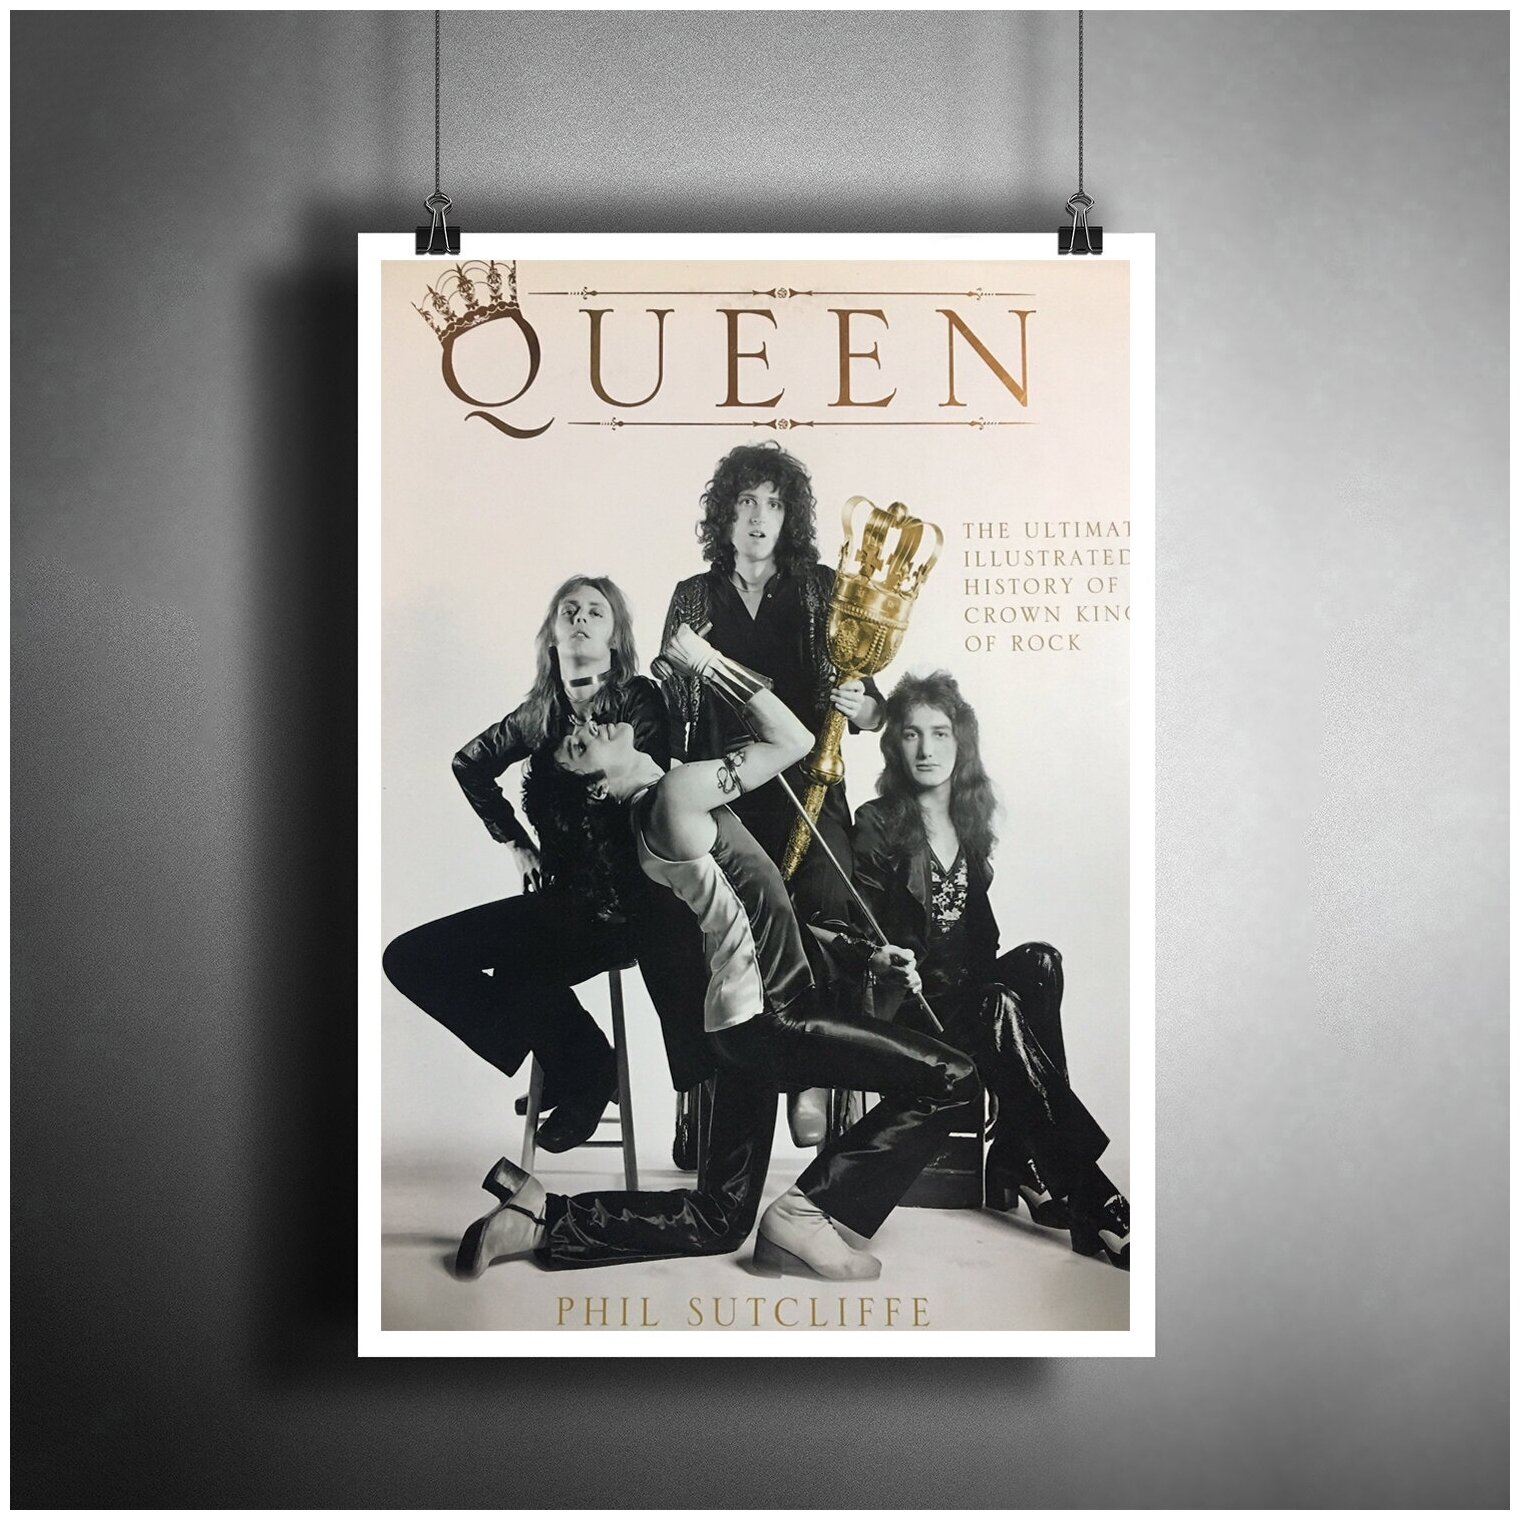 Постер плакат для интерьера "Музыка: Британская рок-группа The Queen (Куин). Фредди Меркьюри" / Декор дома офиса комнаты квартиры A3 (297 x 420 мм)